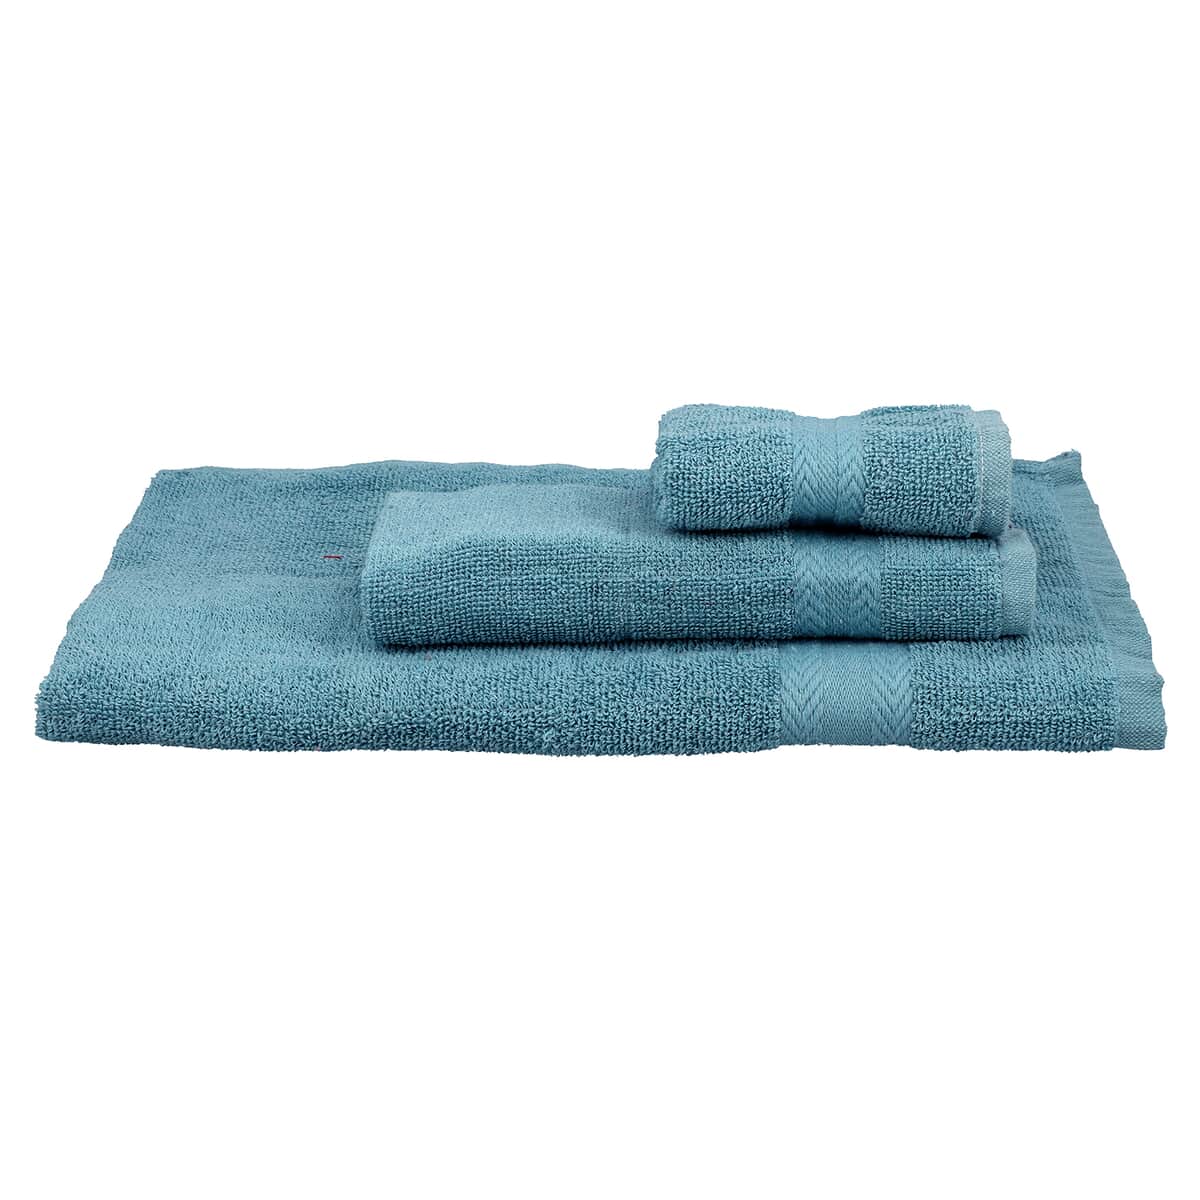 Mint 3 Pc Cotton Towel Set - 1 Bath Towel, 1 Hand Towel and 1 Face Towel image number 0